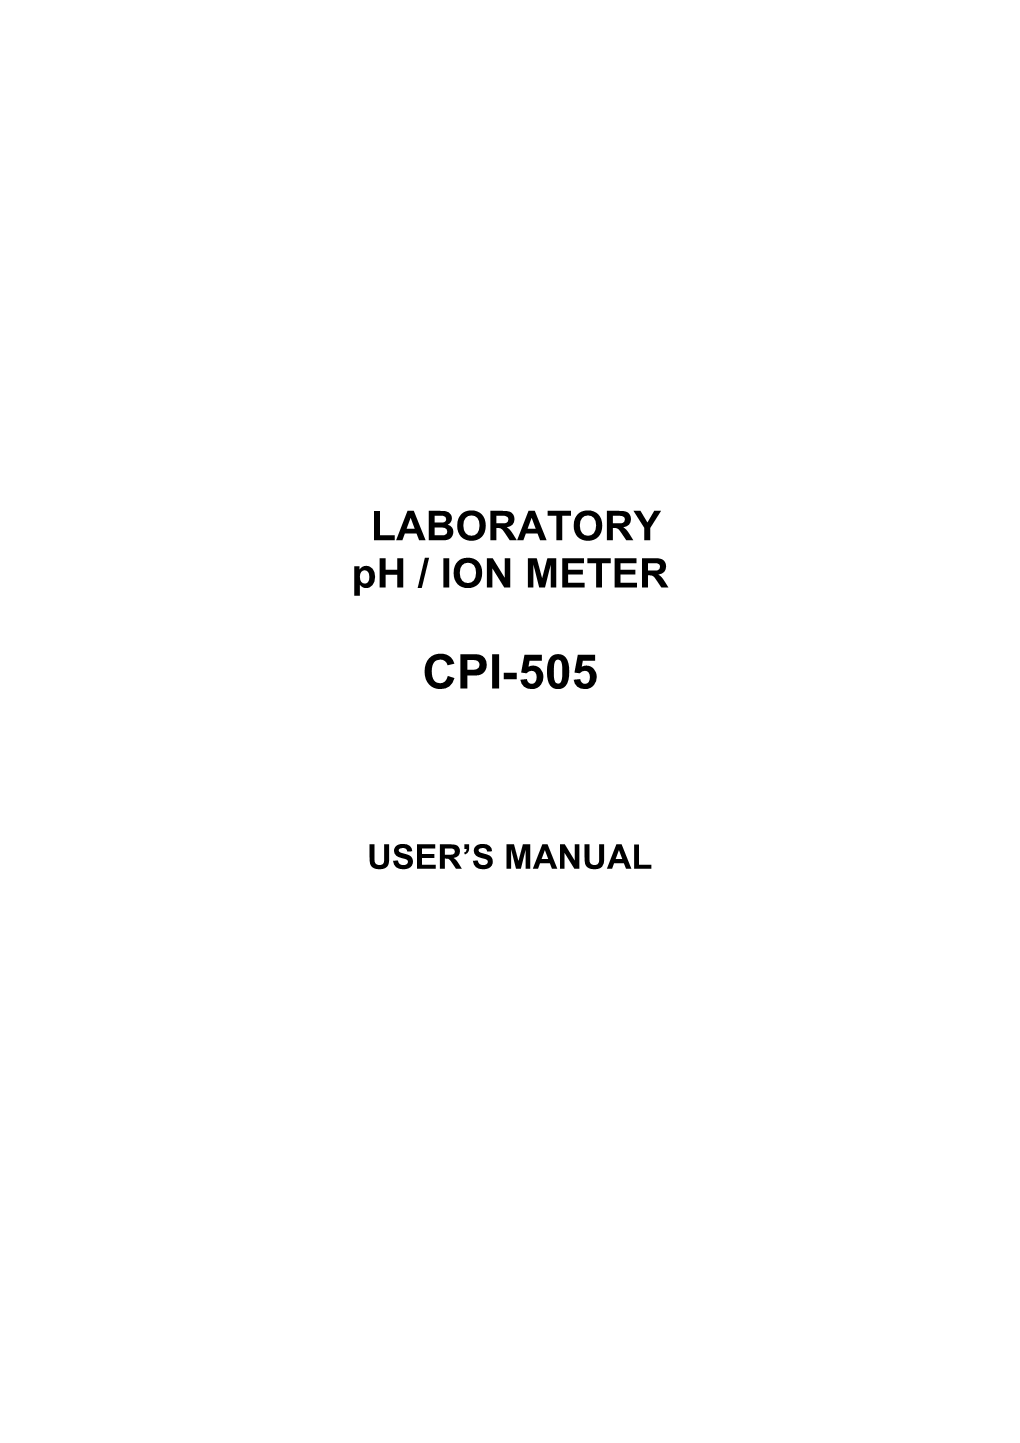 Ph / ION METER CPI-505